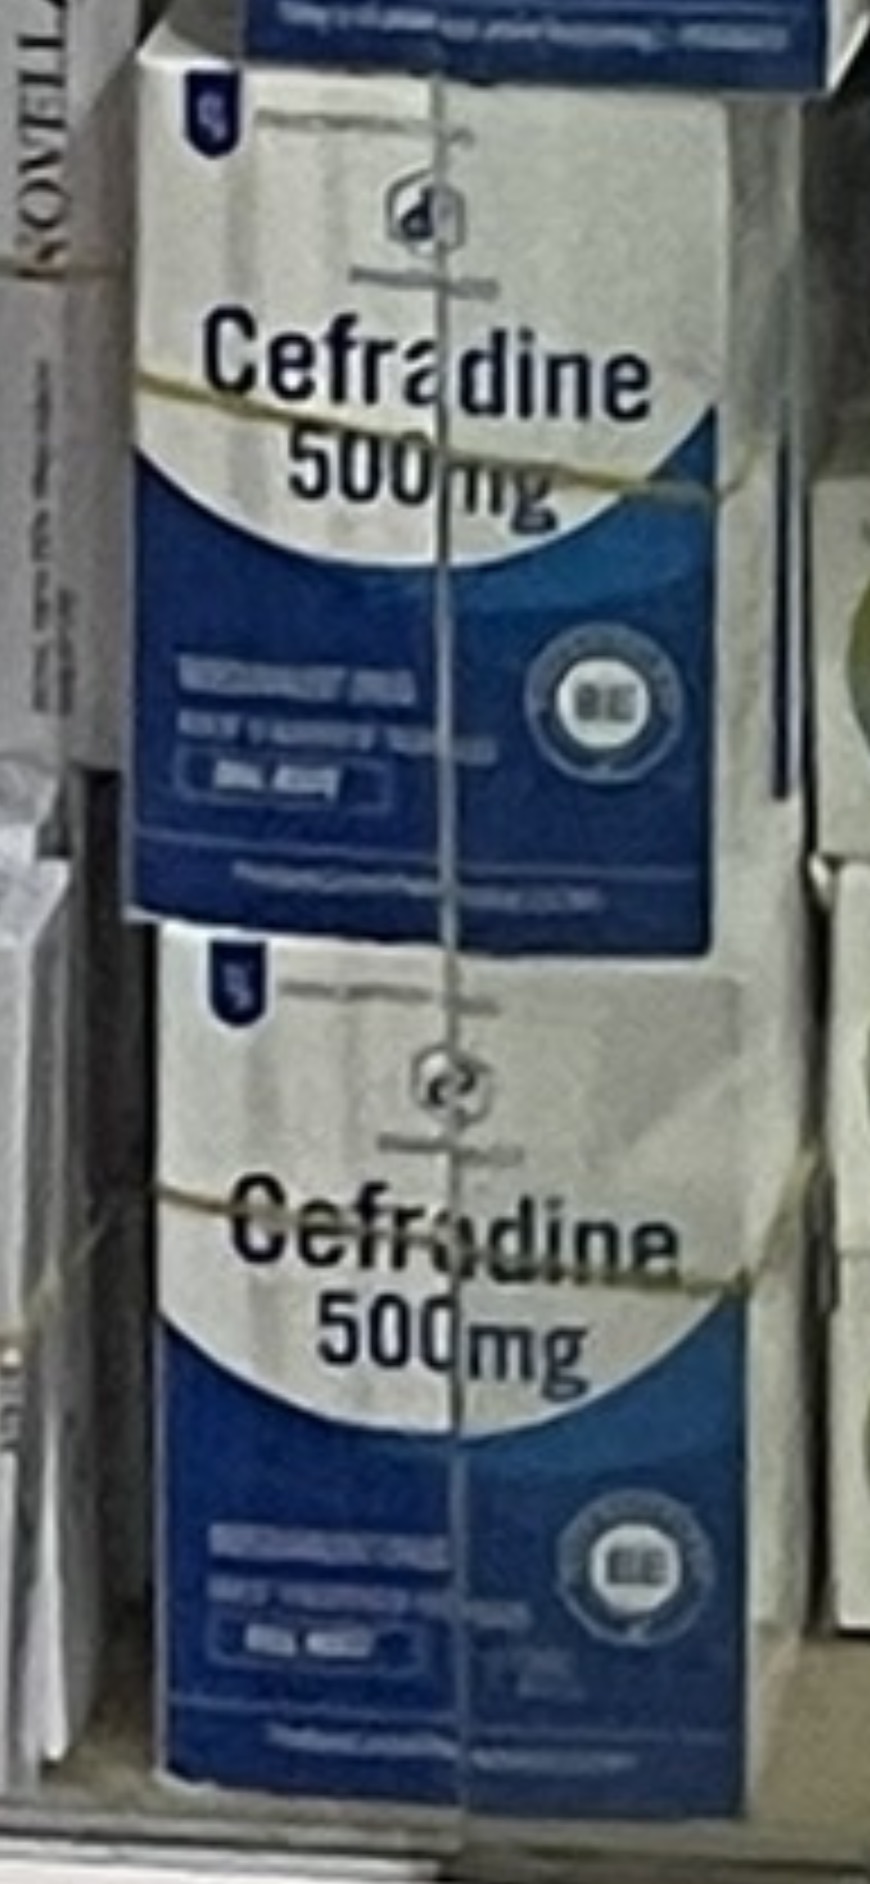 Cefradine 500mg